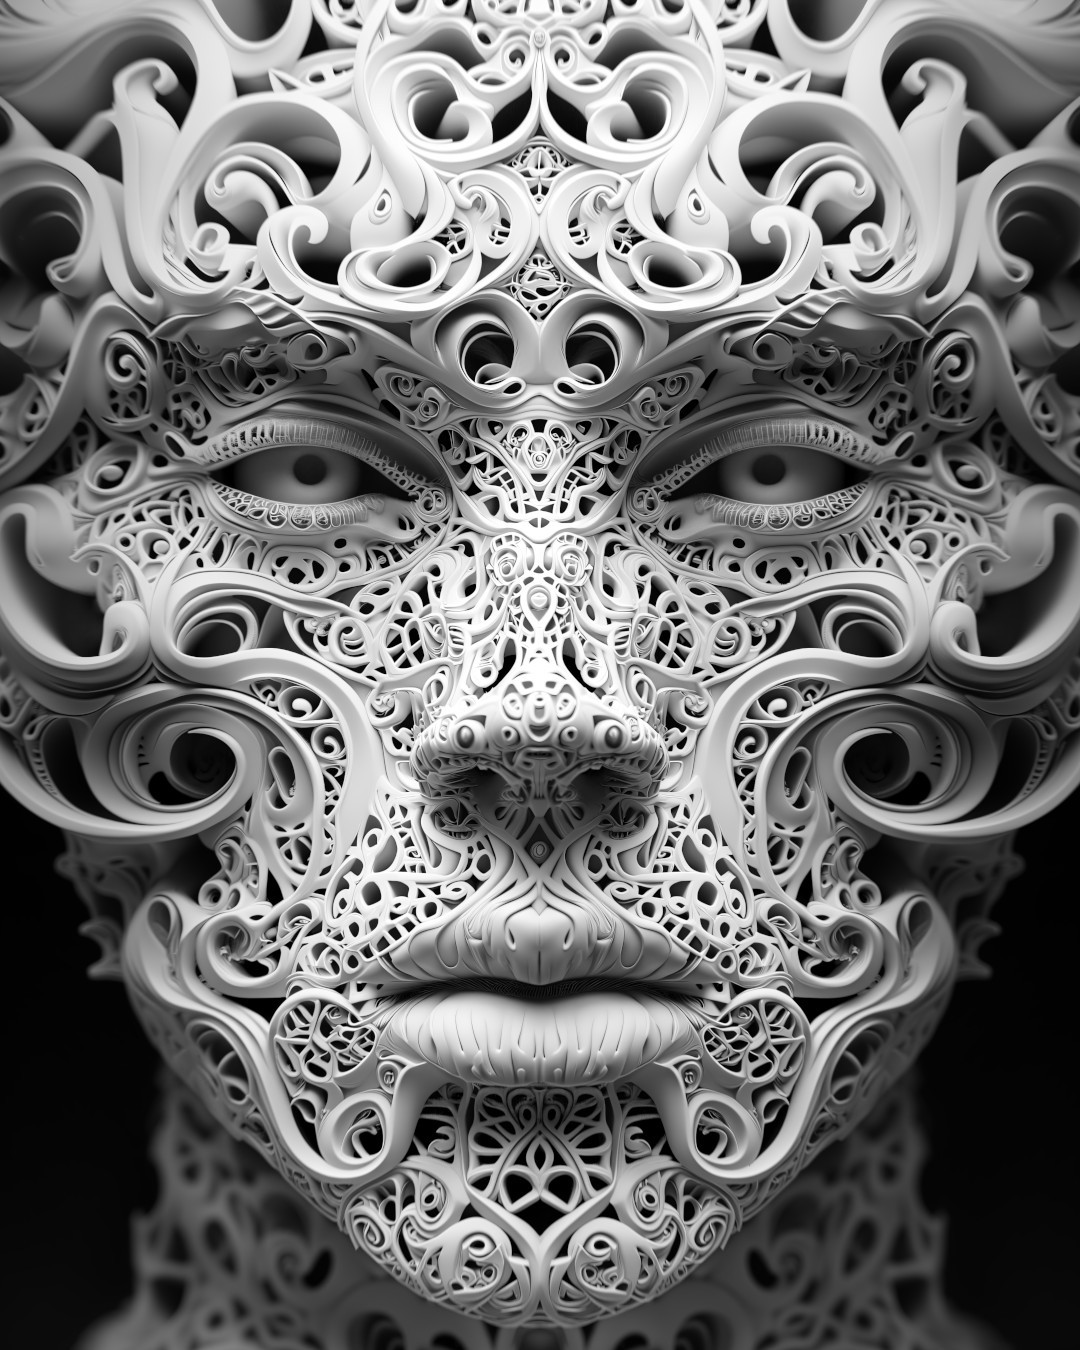 Head sculpture, intricate patterns and details, dark white